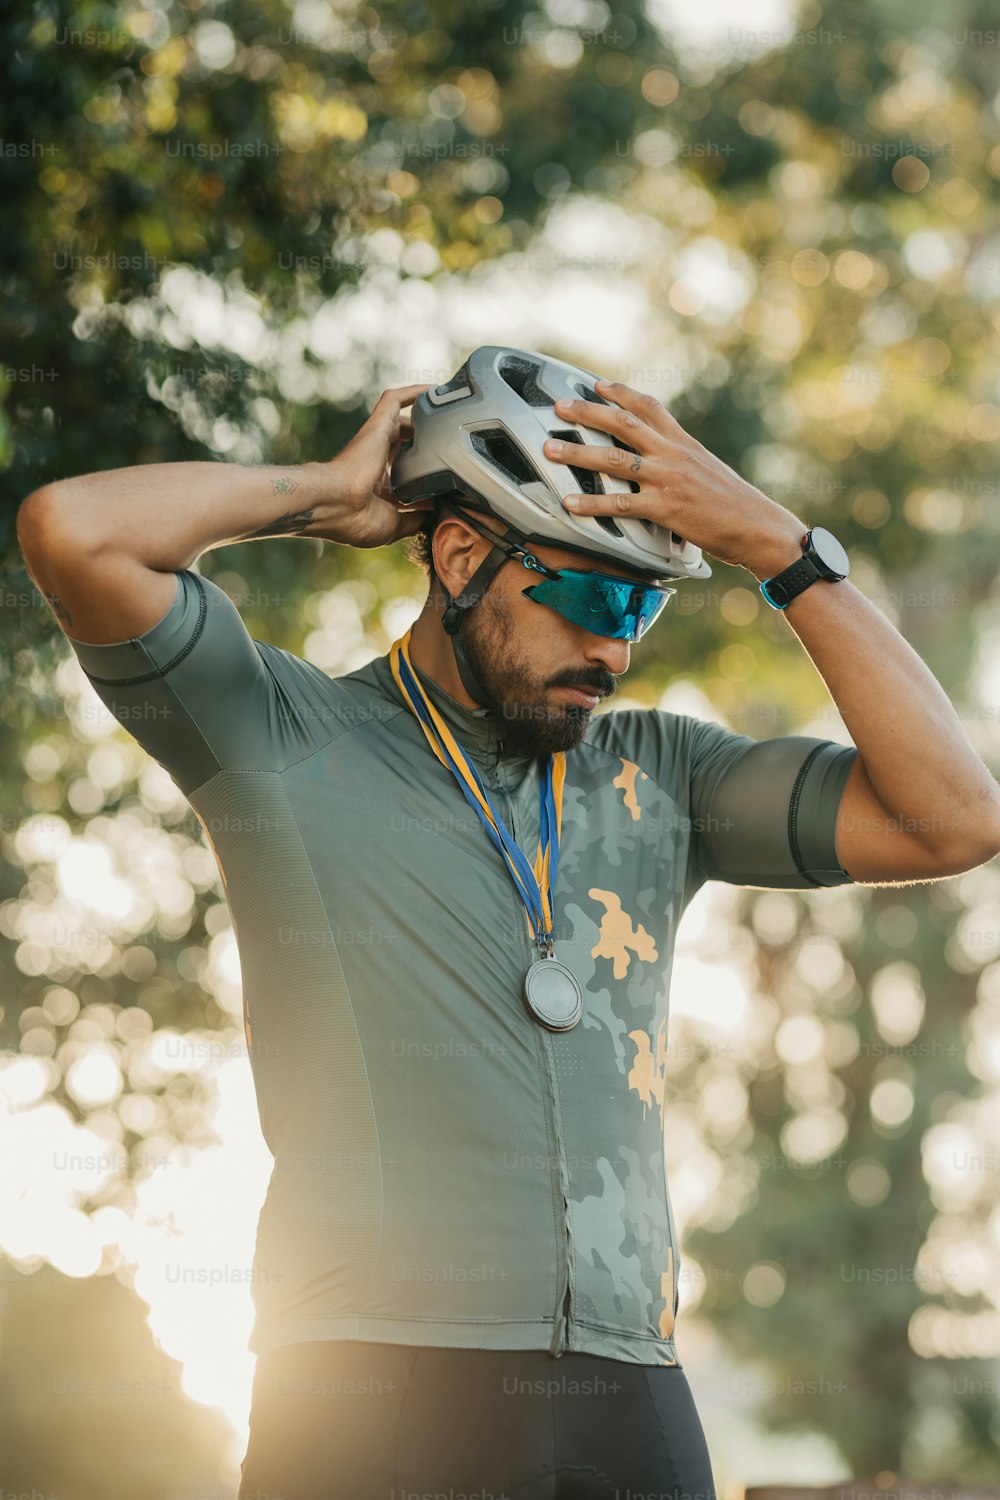 a man wearing a bike helmet and sunglasses